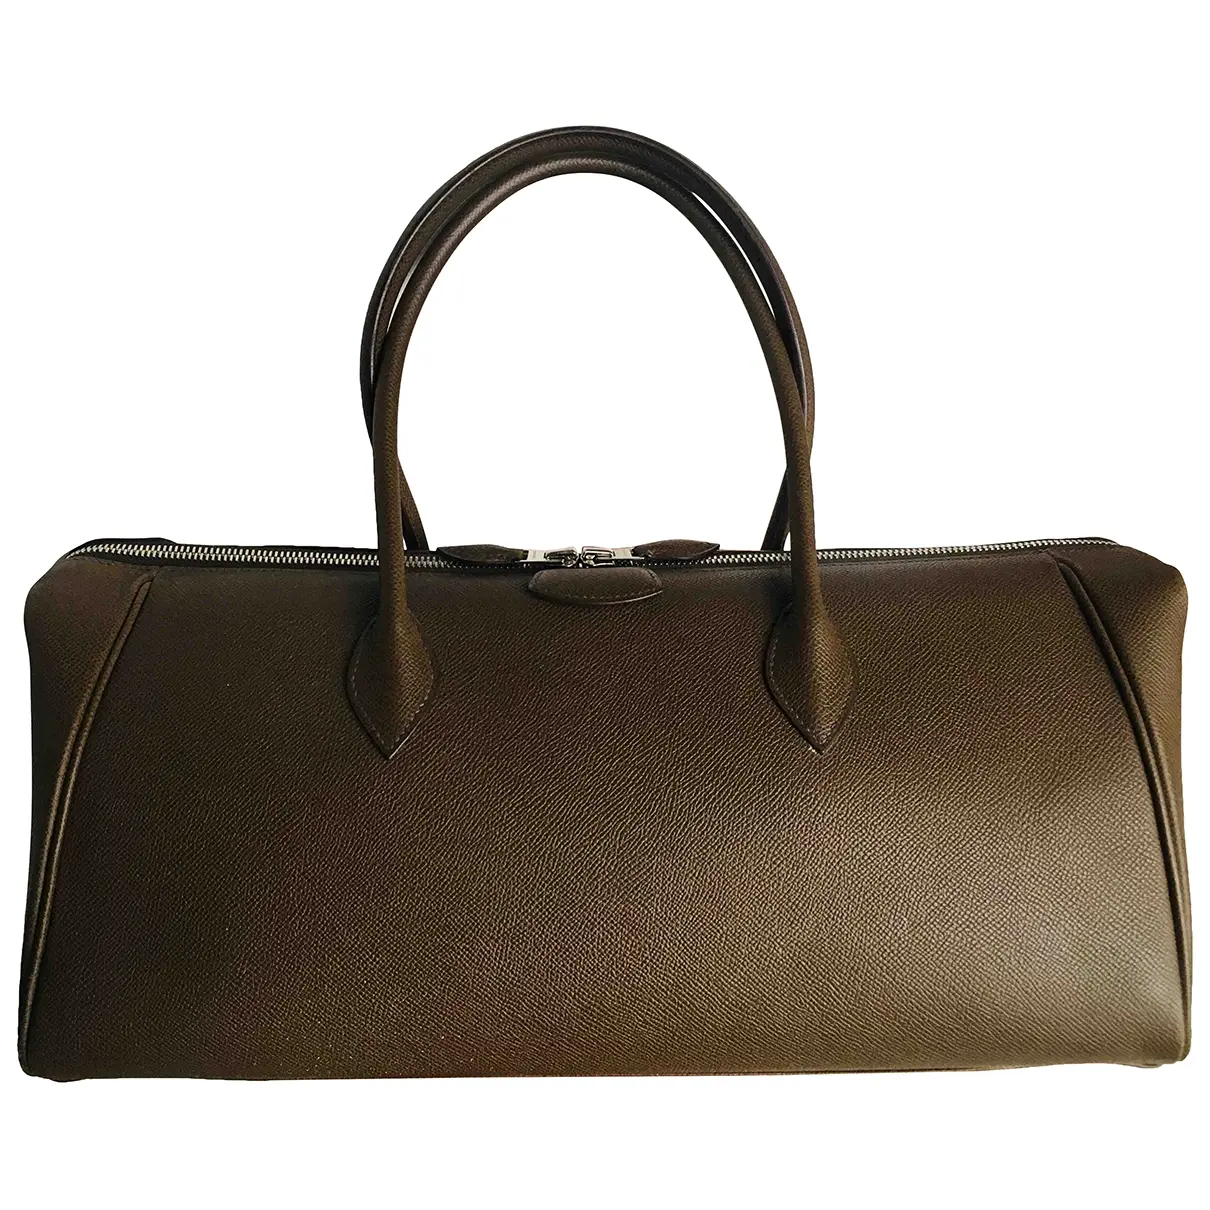 Paris Bombay leather handbag Hermès